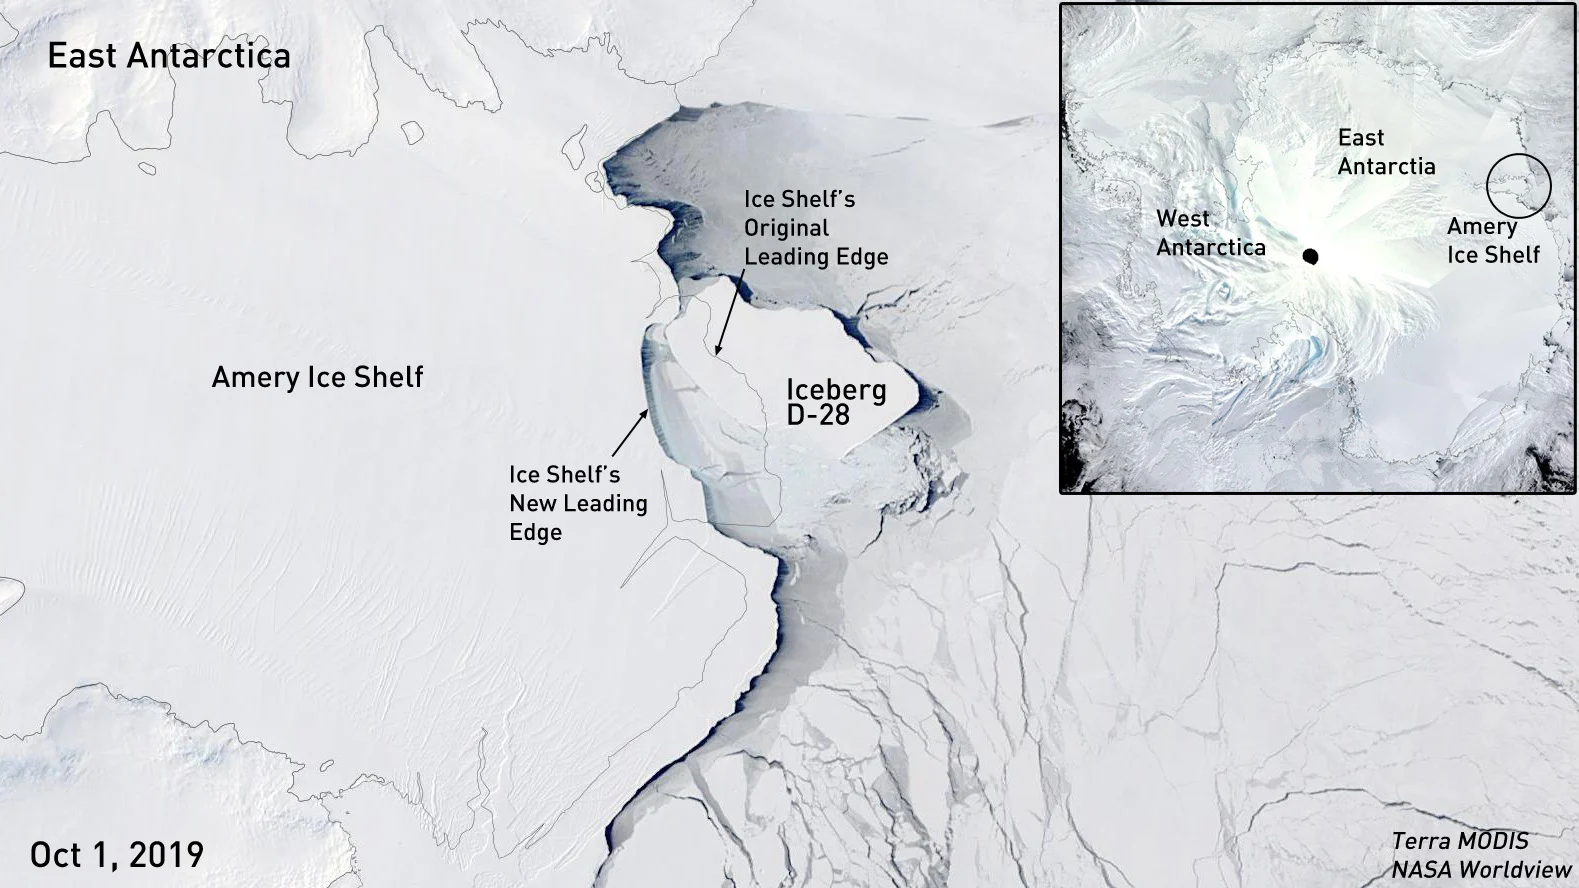 Amery-Iceberg-D28-Antarctica-Oct-1-2019-Terra-MODIS-NASA-Worldview-labelled